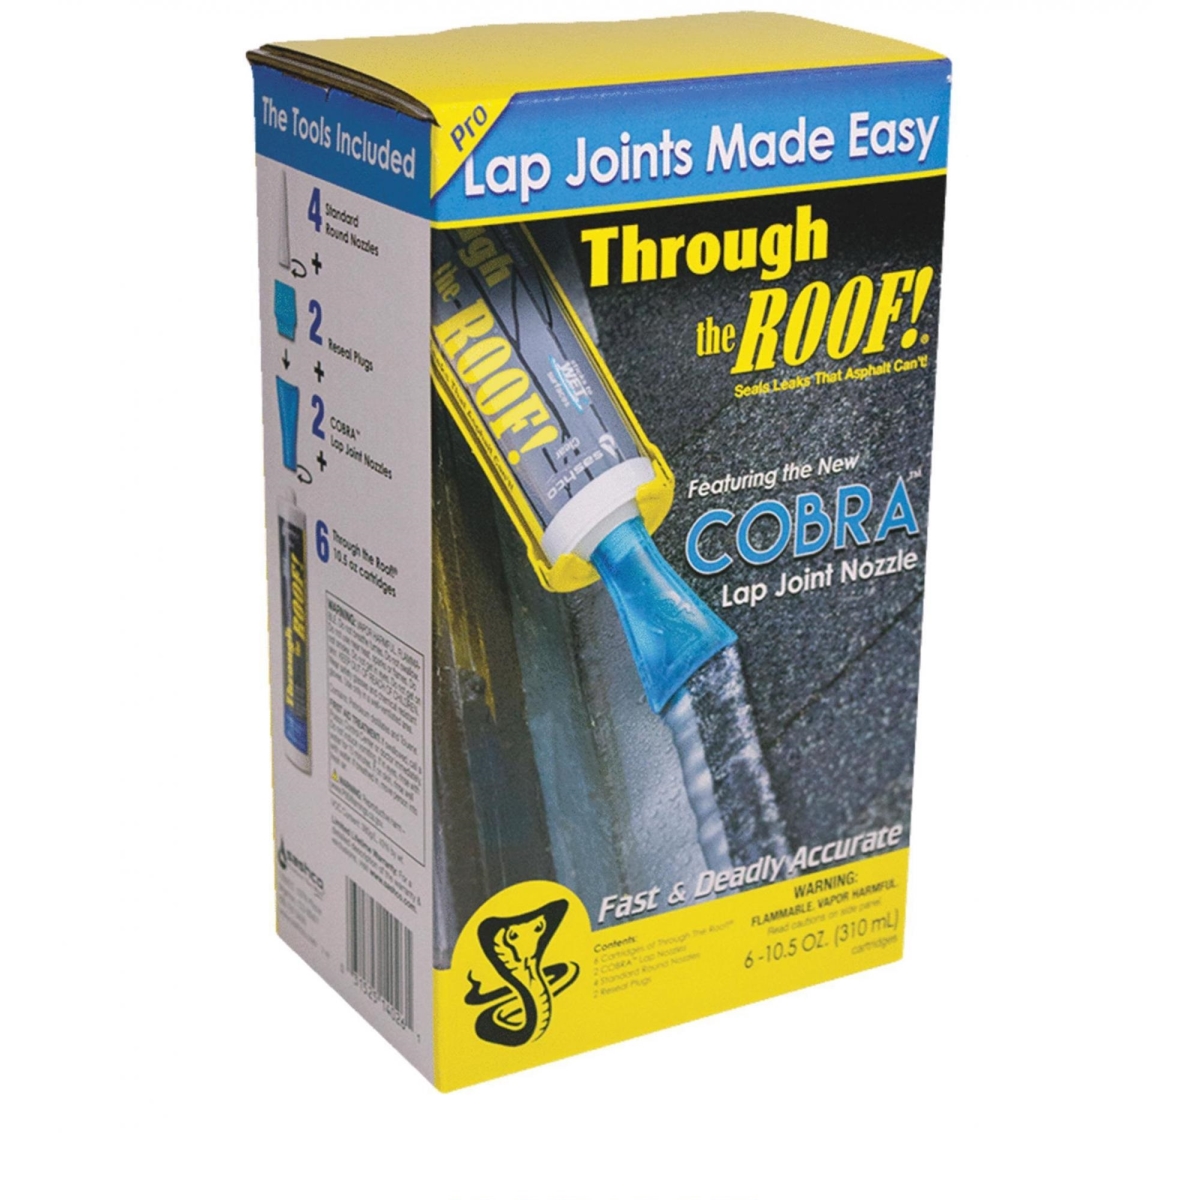 253979 Cobra Joint Nozzle Kit - Clear